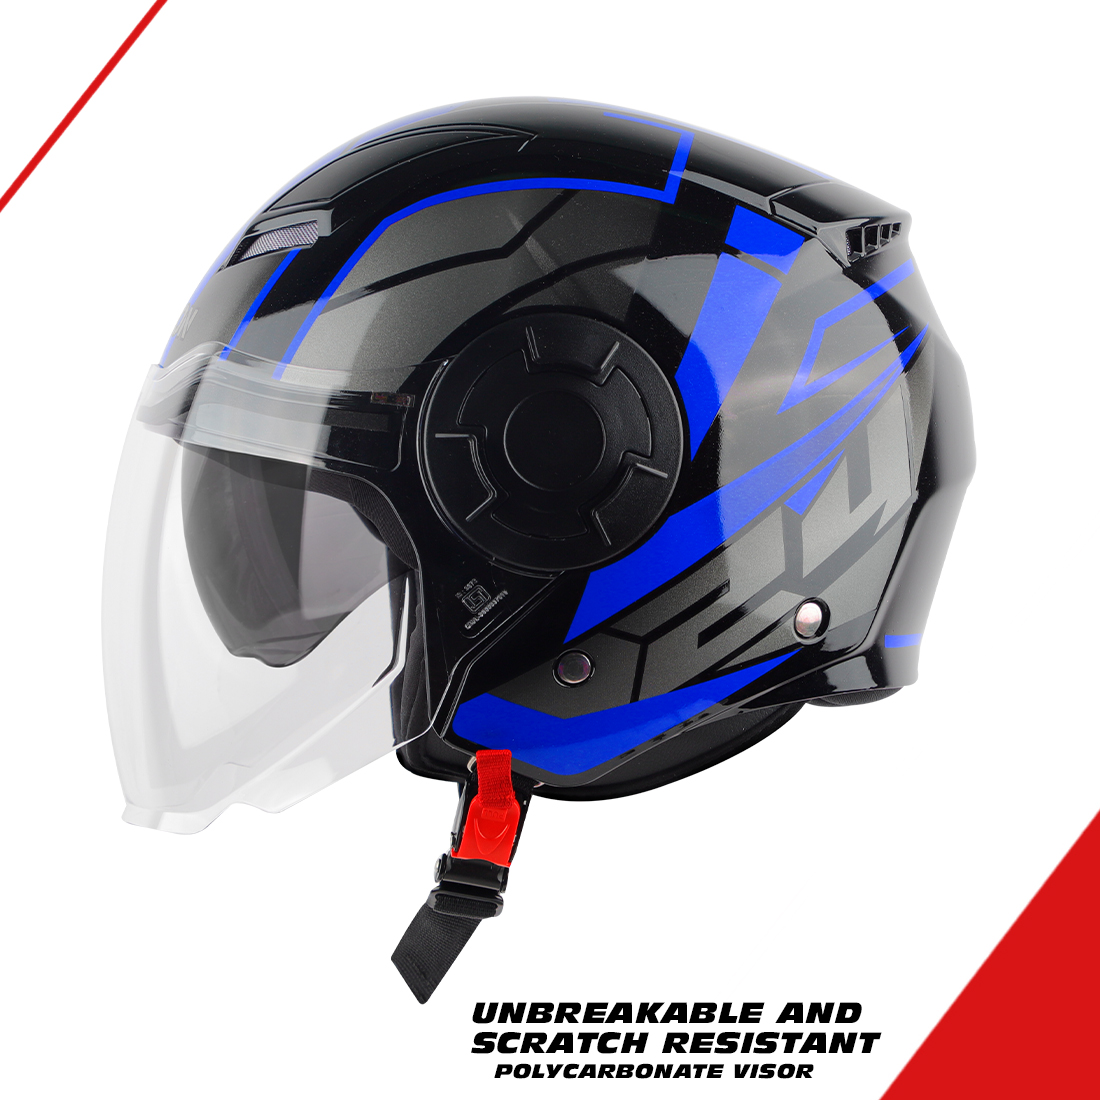 Steelbird SBH-31 Baron 24 ISI Certified Open Face Helmet For Men And Women With Inner Sun Shield(Dual Visor Mechanism) (Matt Black Blue)